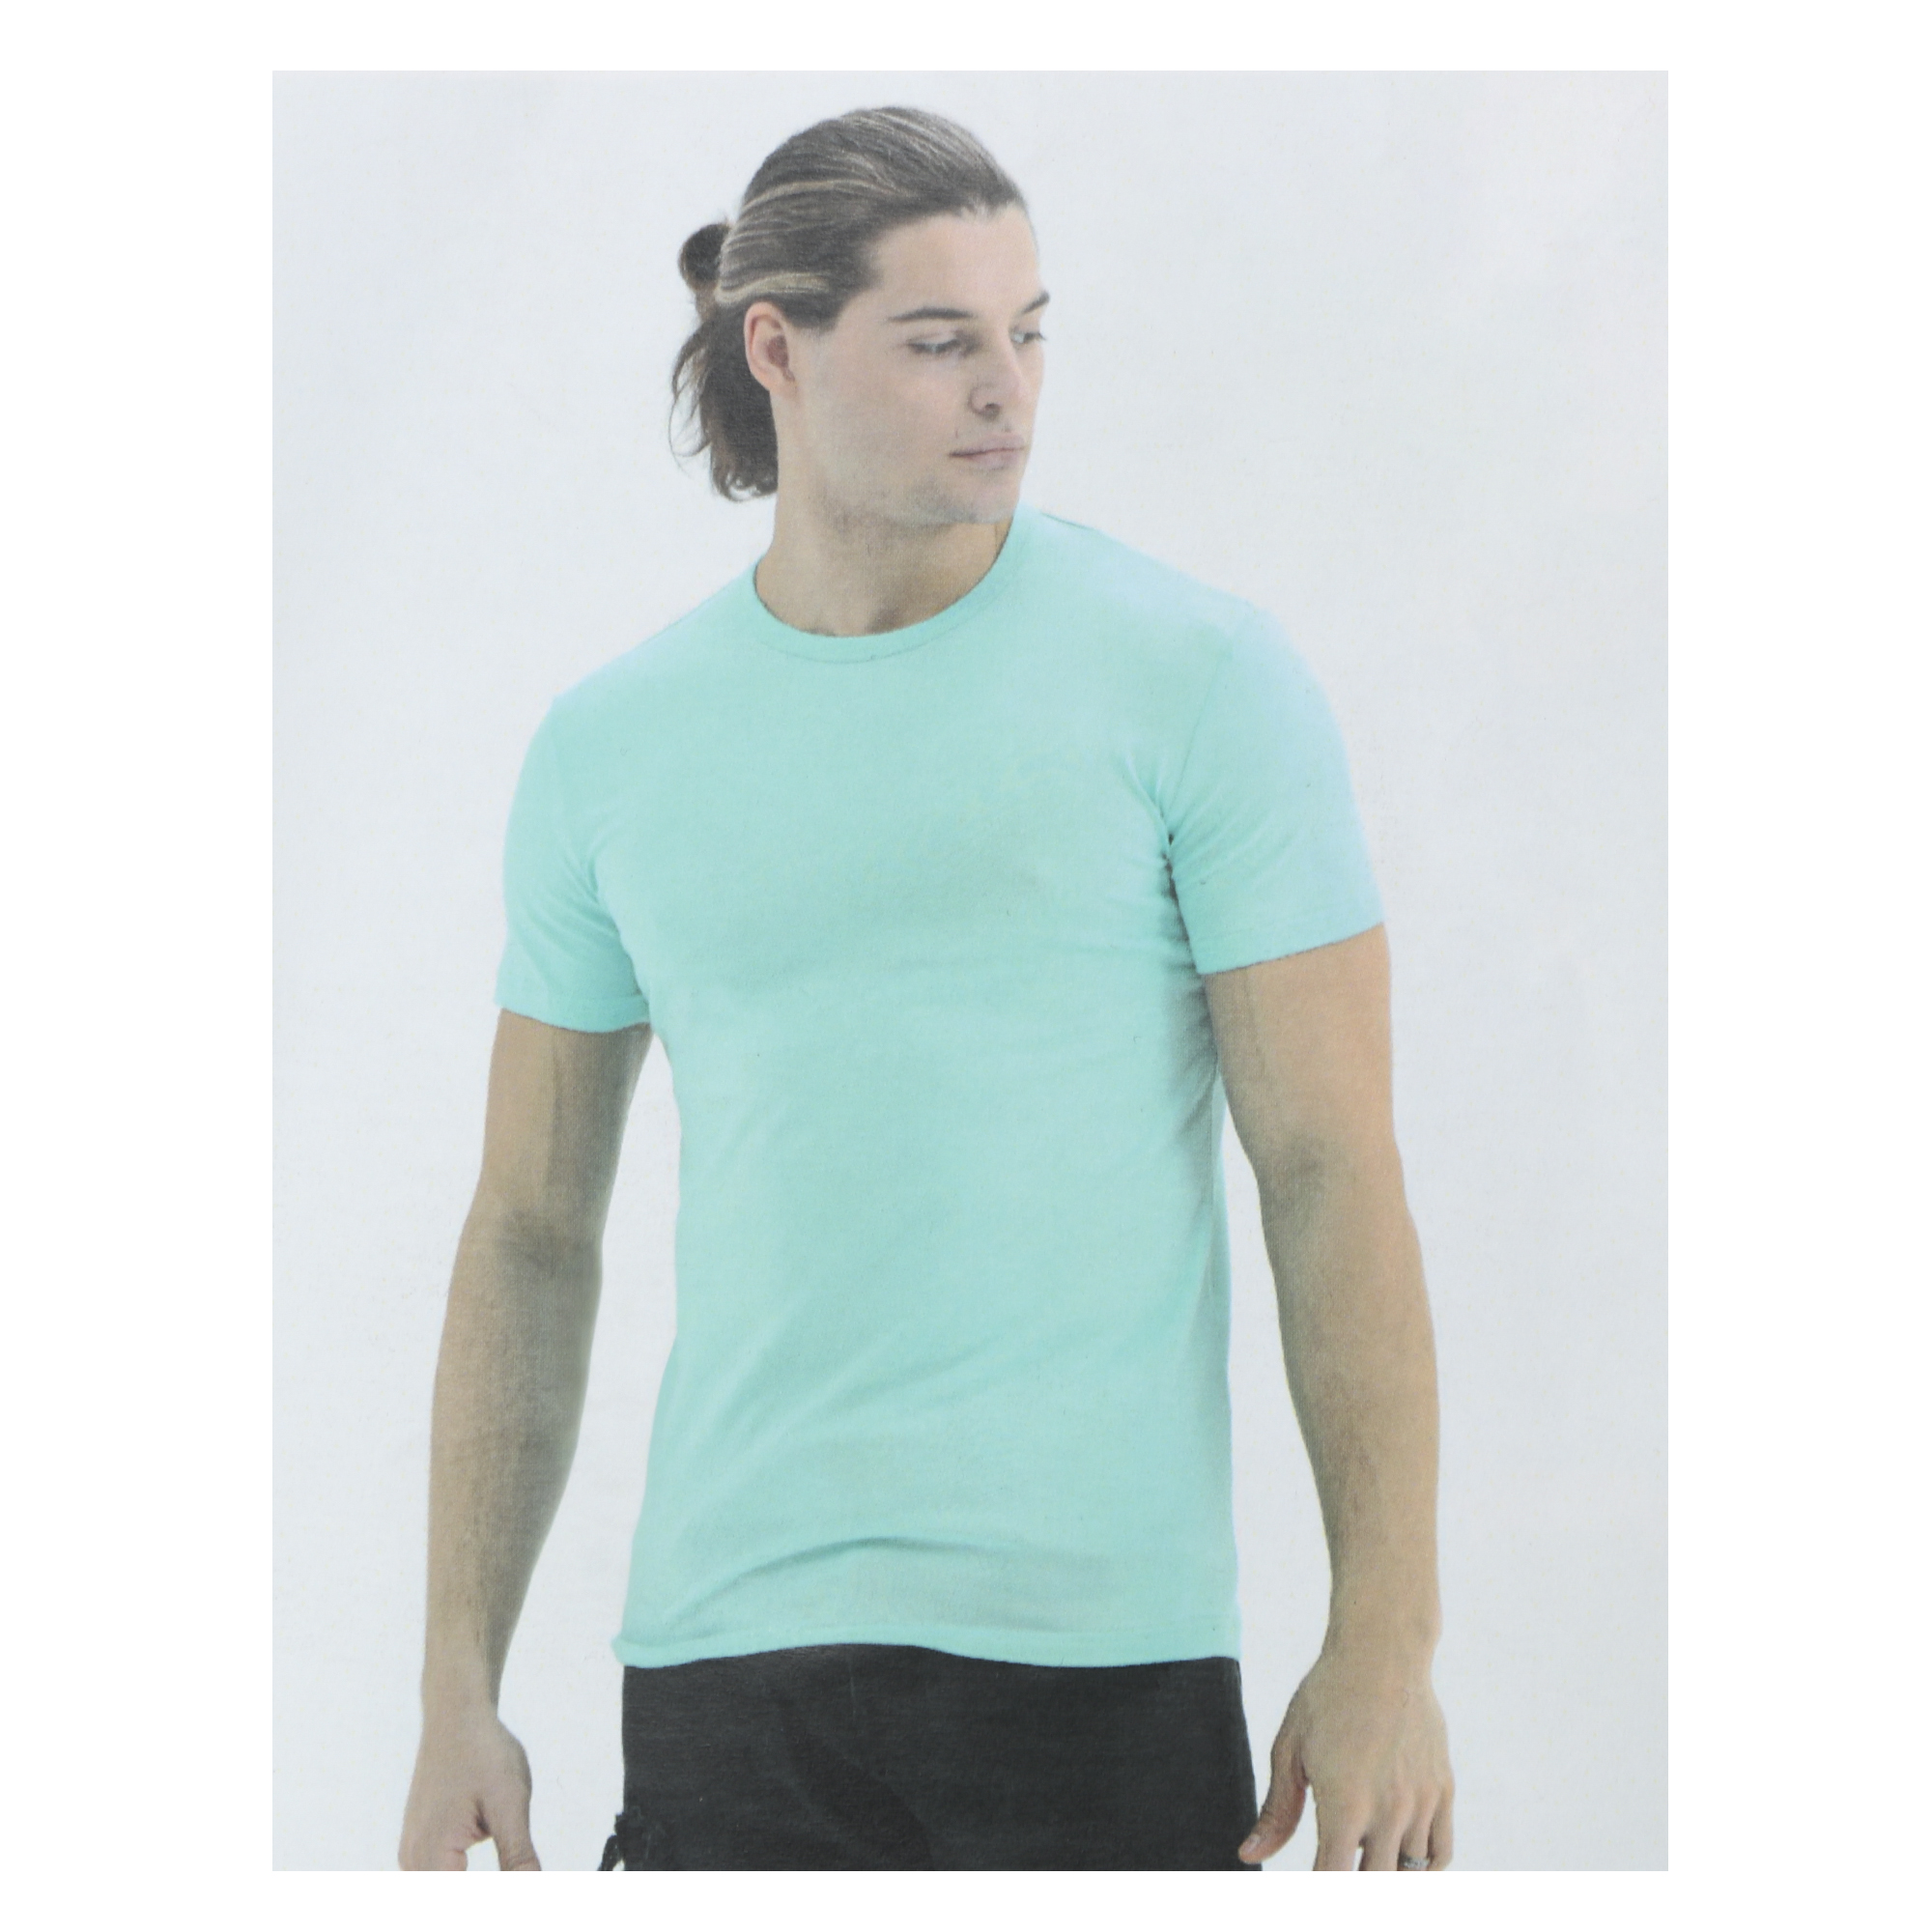 Мужская футболка Pantelemone MF-913 50 ментоловая, цвет ментоловый, размер 50 - фото 2